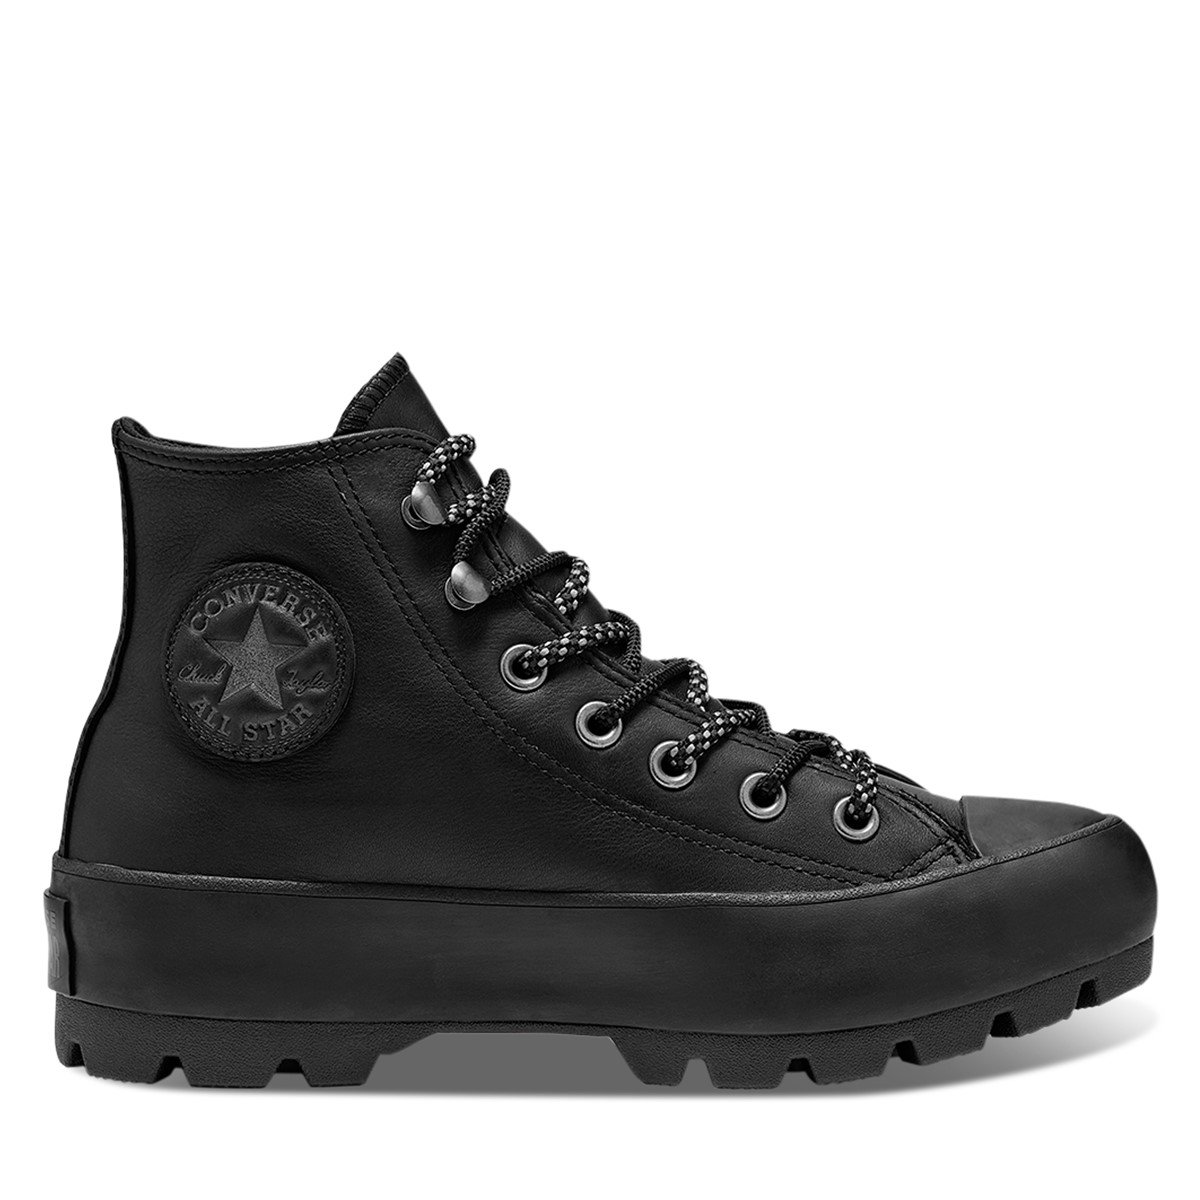 waterproof converse boot